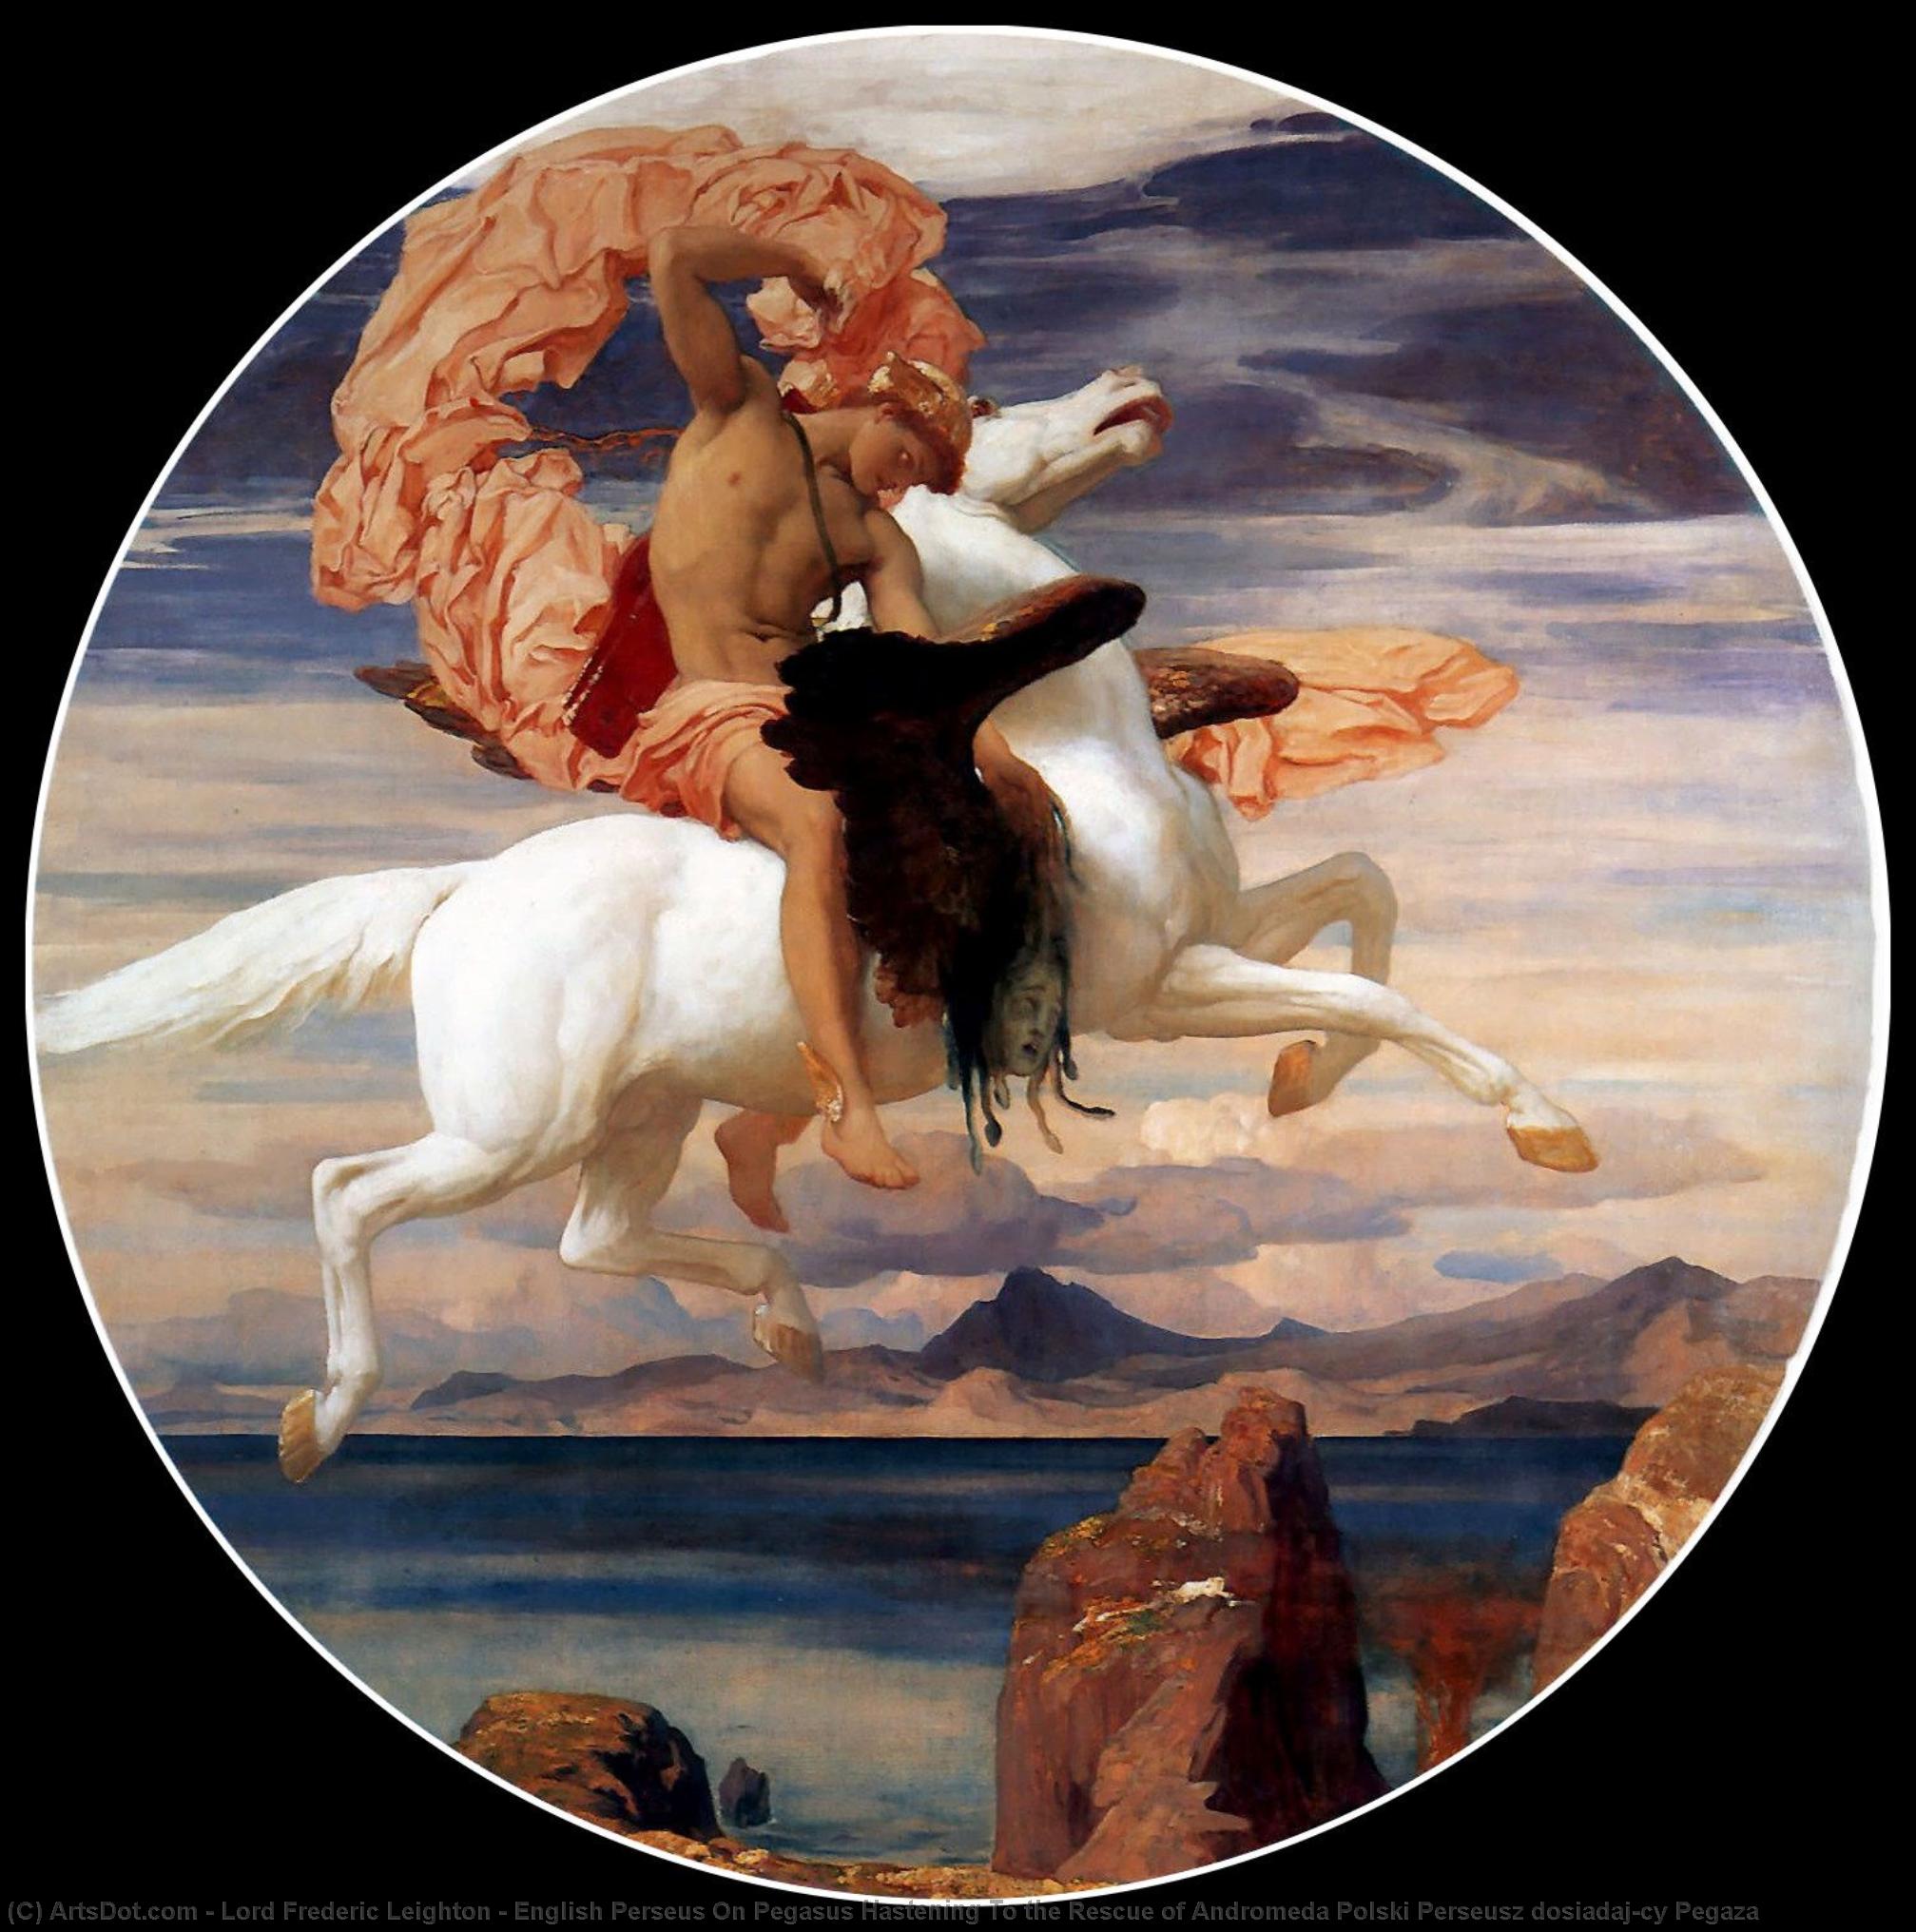 Wikioo.org - The Encyclopedia of Fine Arts - Painting, Artwork by Lord Frederic Leighton - English Perseus On Pegasus Hastening To the Rescue of Andromeda Polski Perseusz dosiadający Pegaza